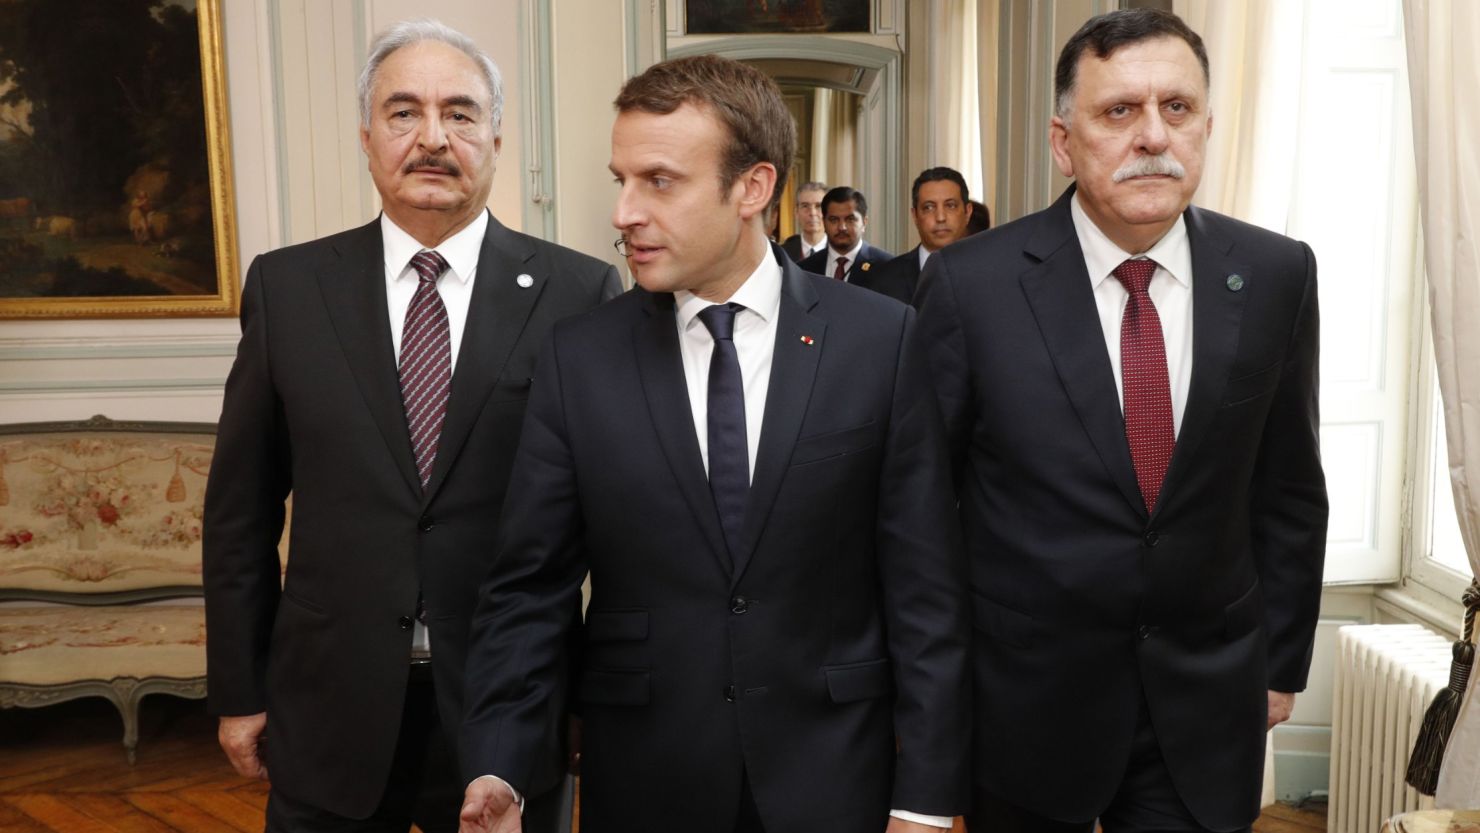 French President Emmanuel Macron is flanked Tuesday in Paris by Libyan Prime Minister Fayez al-Sarraj, left, and Gen. Khalifa Haftar.